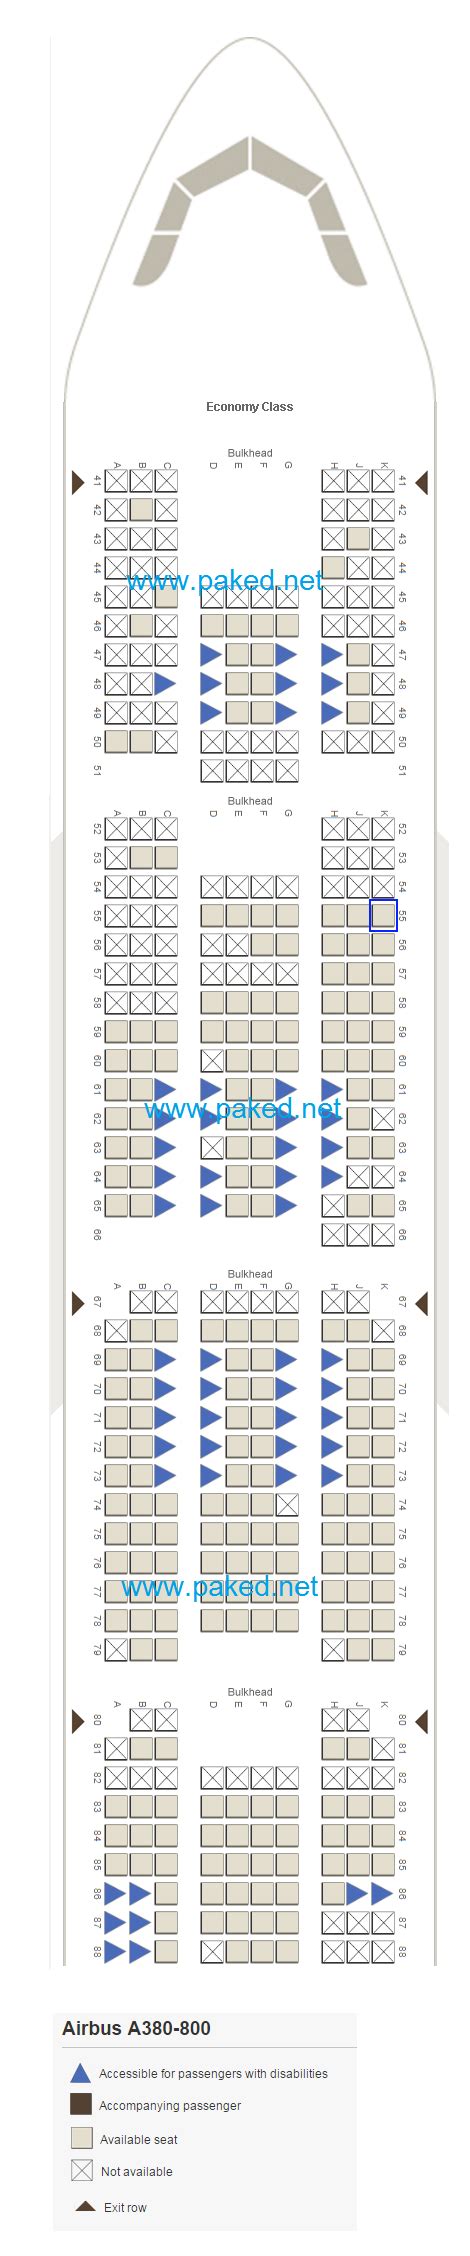 Emirates Seat Map